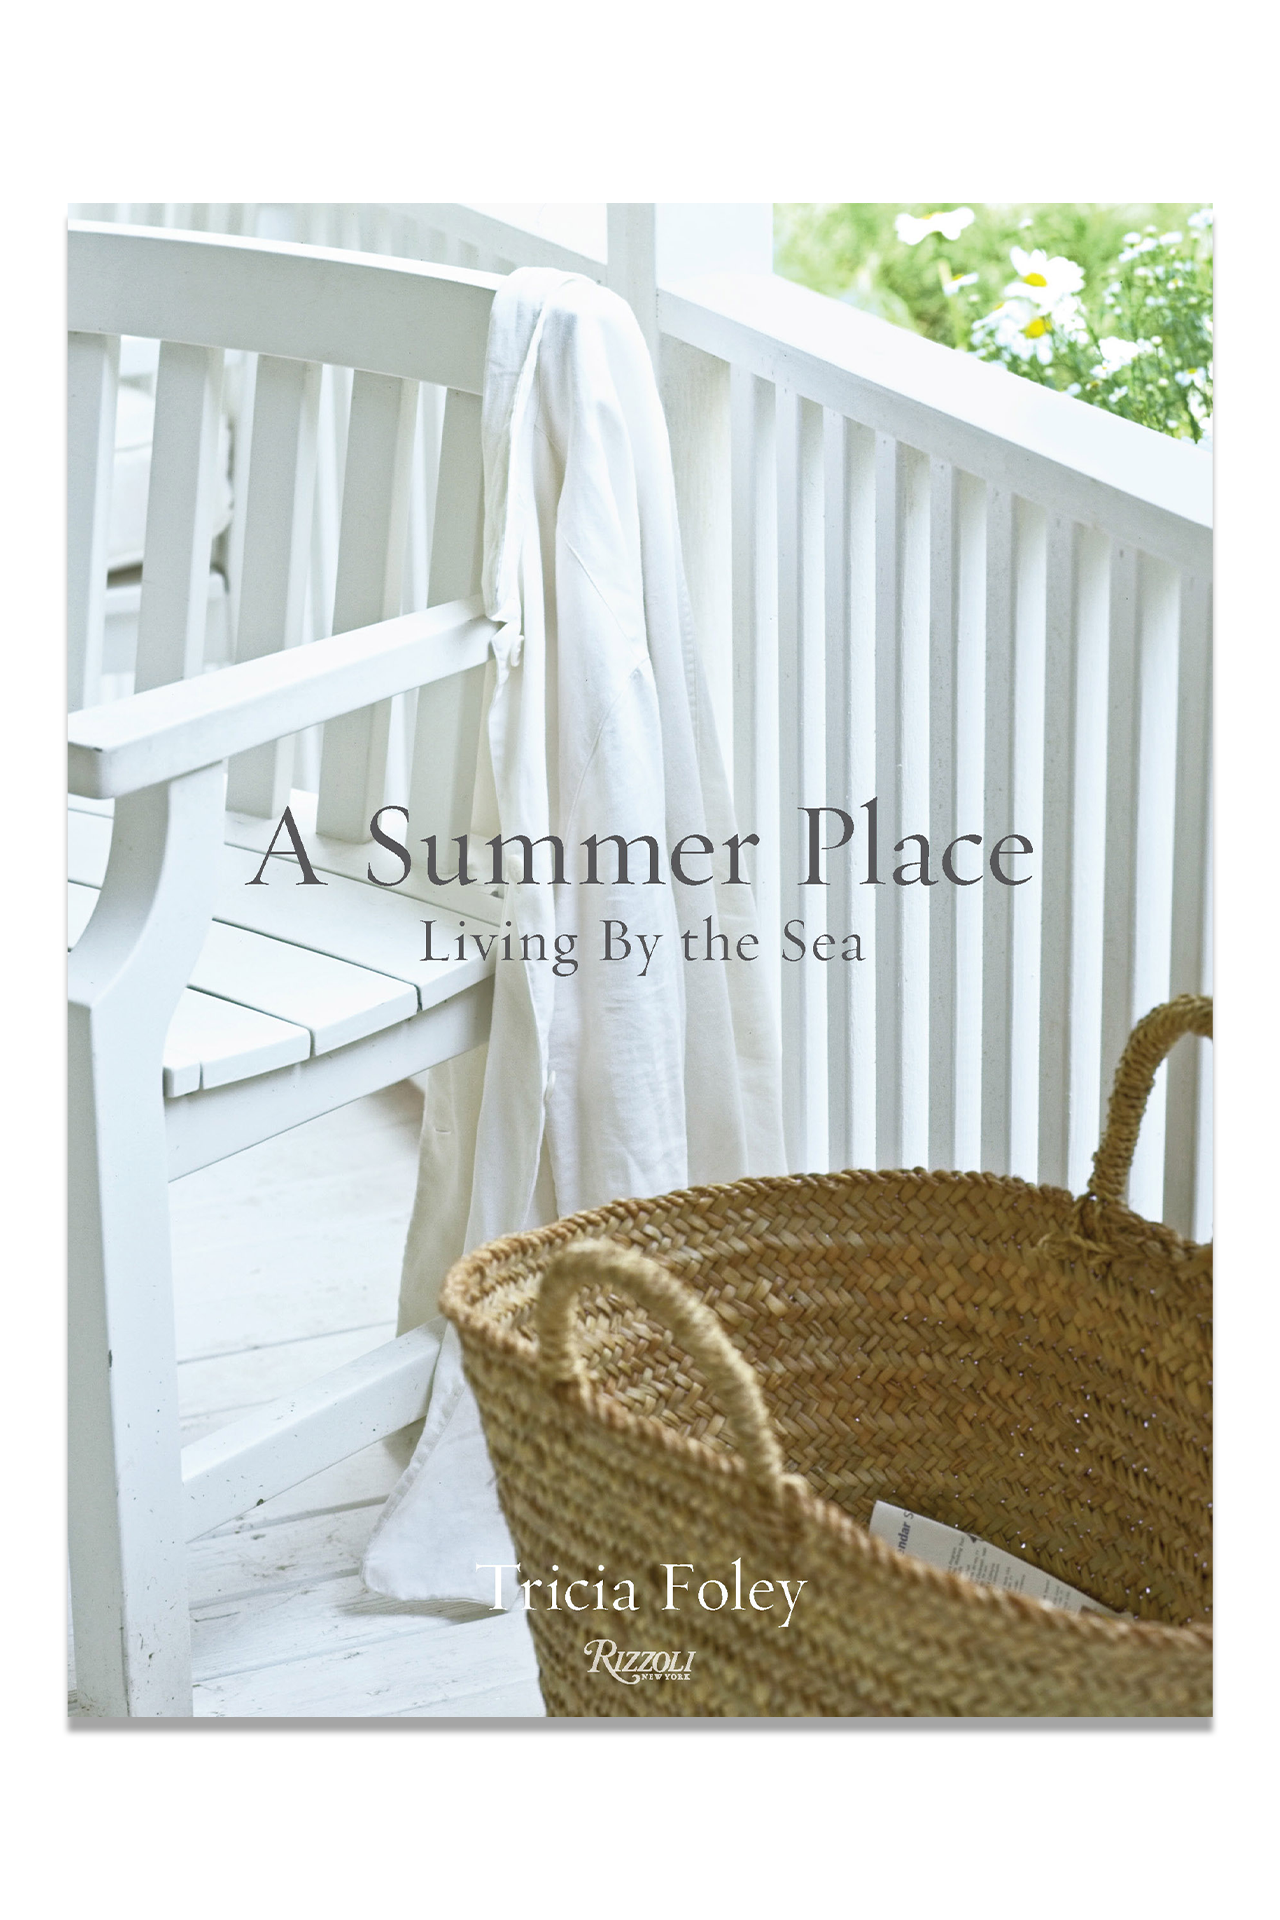 A Summer Place (6551021420659)